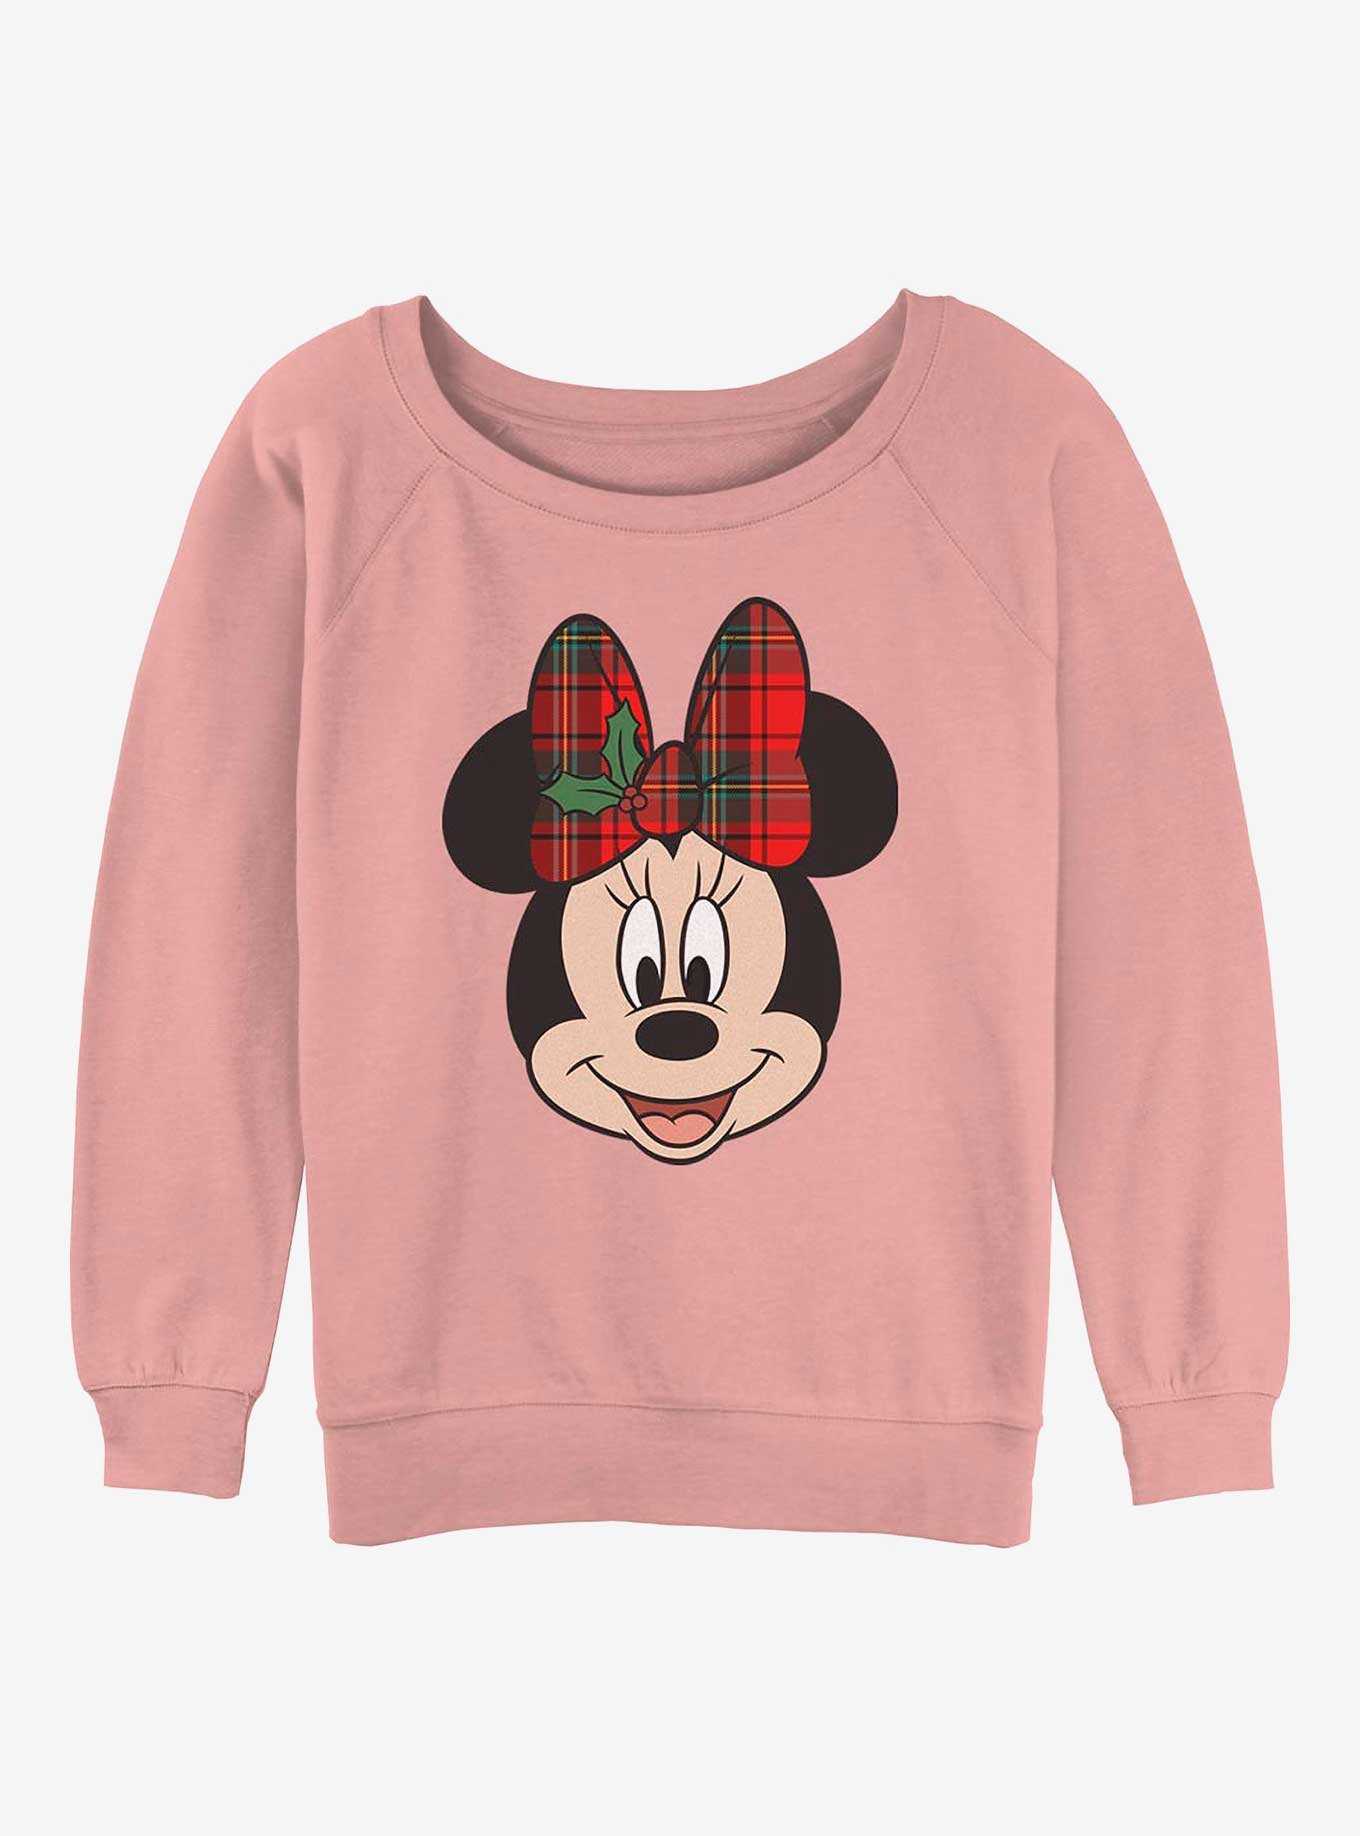 Disney Minnie Mouse Holiday Bow Girls Slouchy Sweatshirt, , hi-res